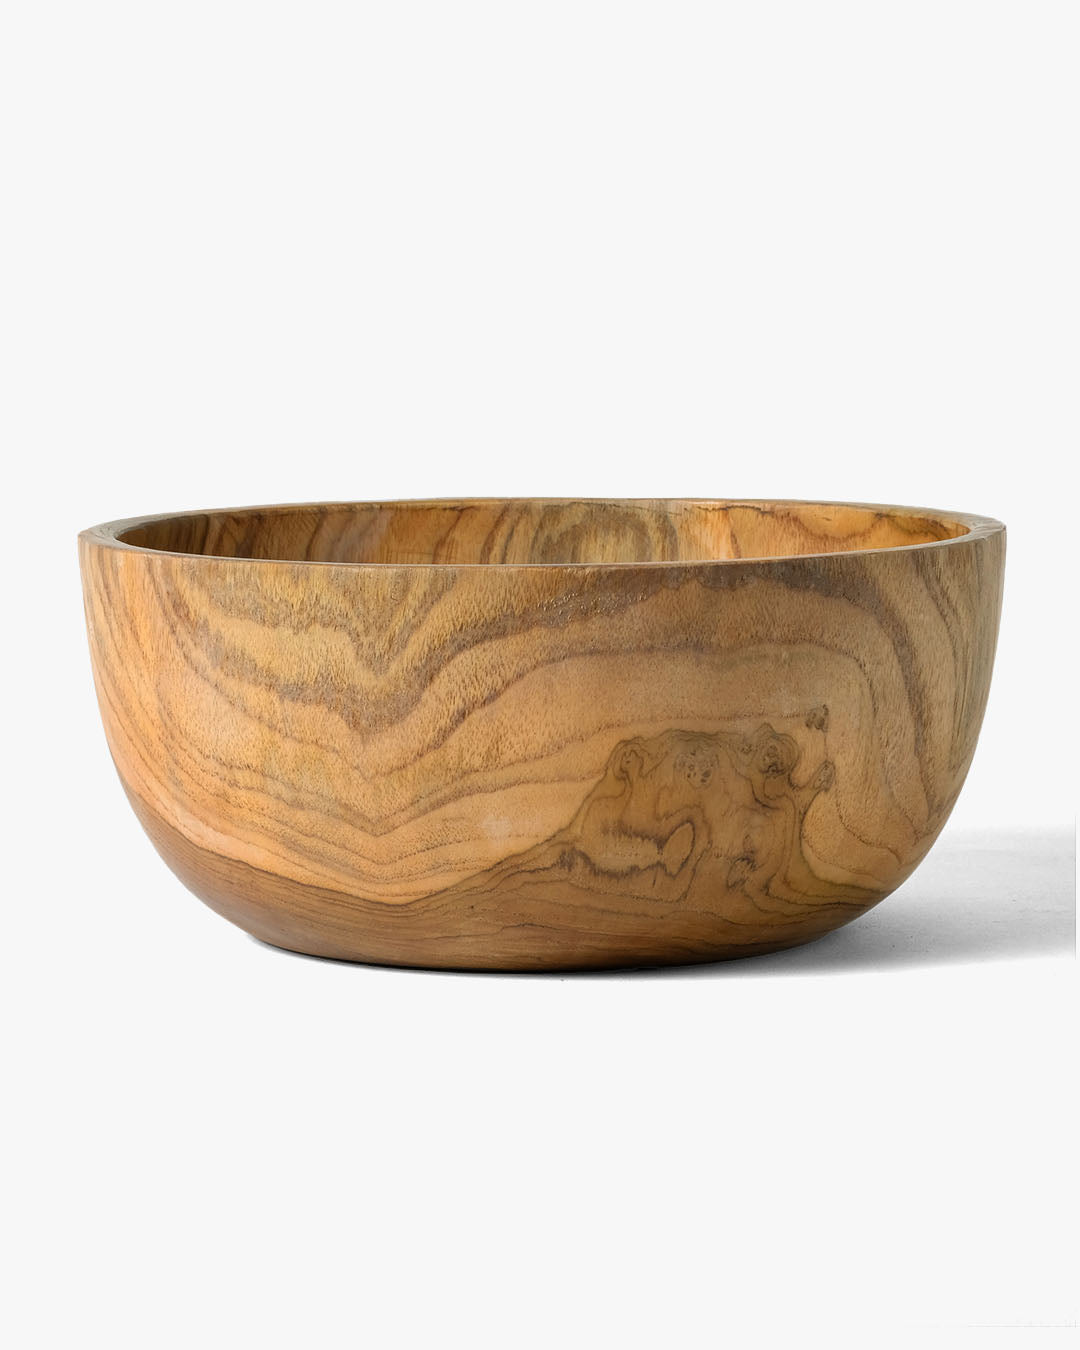 Bowl de madera maciza de teca 100 % natural Kupang, hecho a mano, redondo, acabado natural, diámetro 24 cm, Origen Indonesia